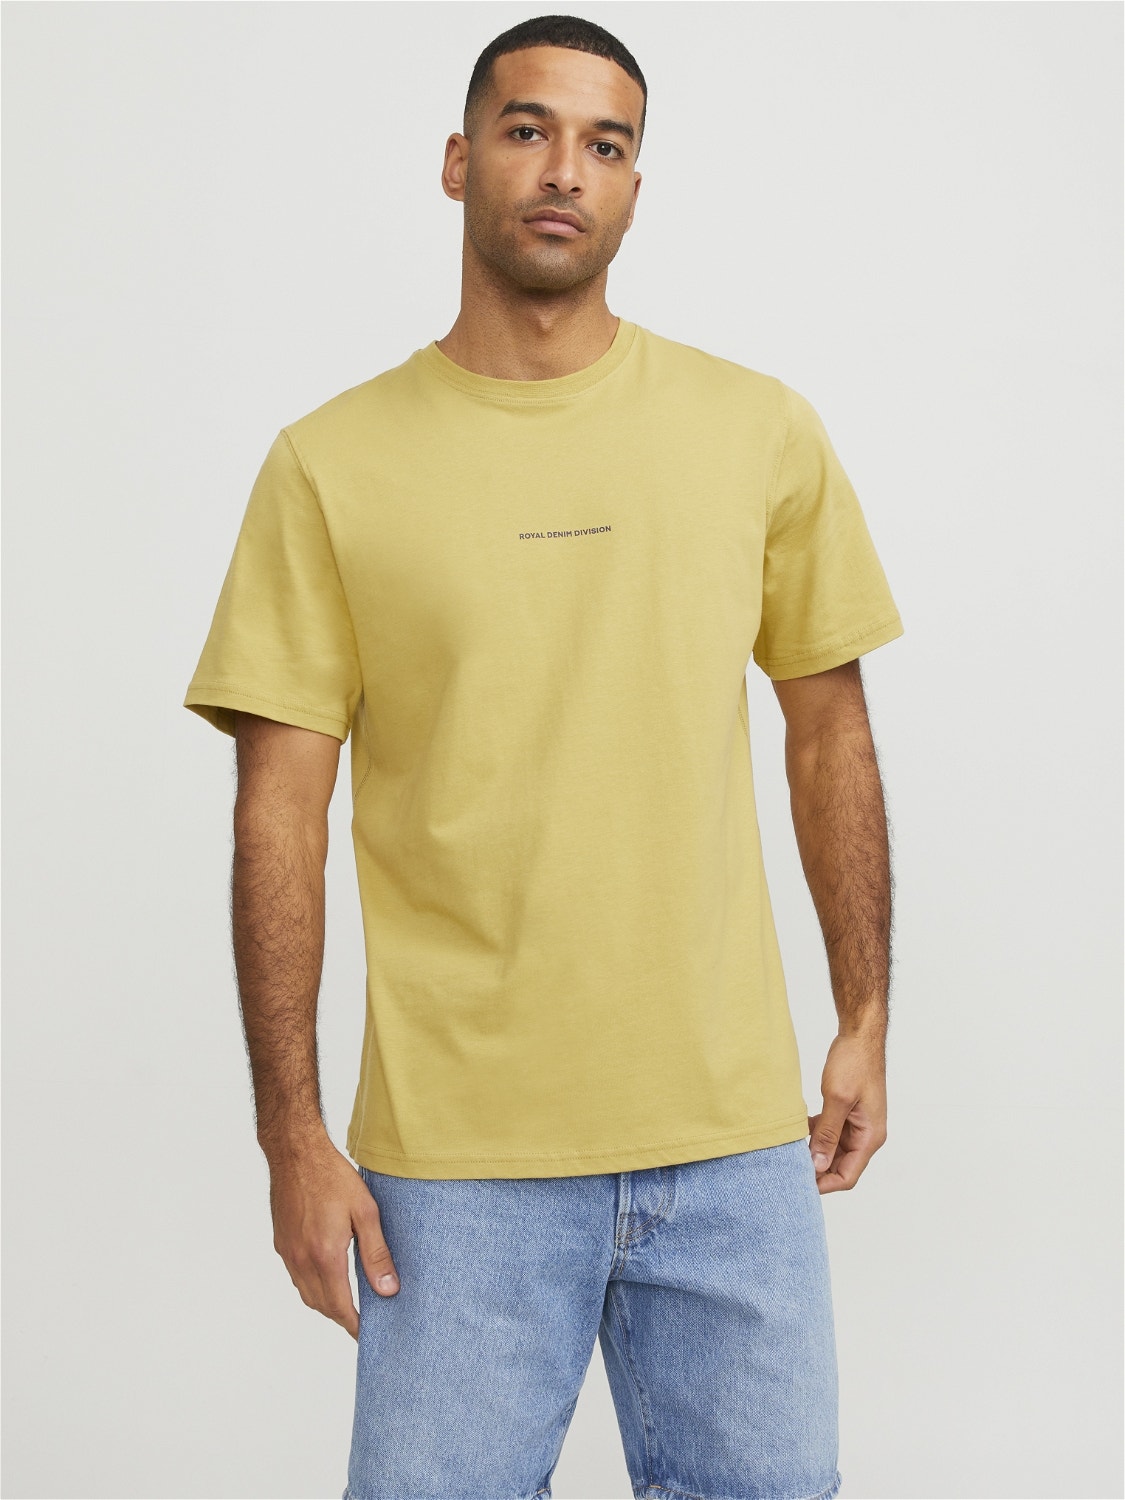 Jack & Jones RDD Printed Crew neck T-shirt -Antique Gold - 12252153